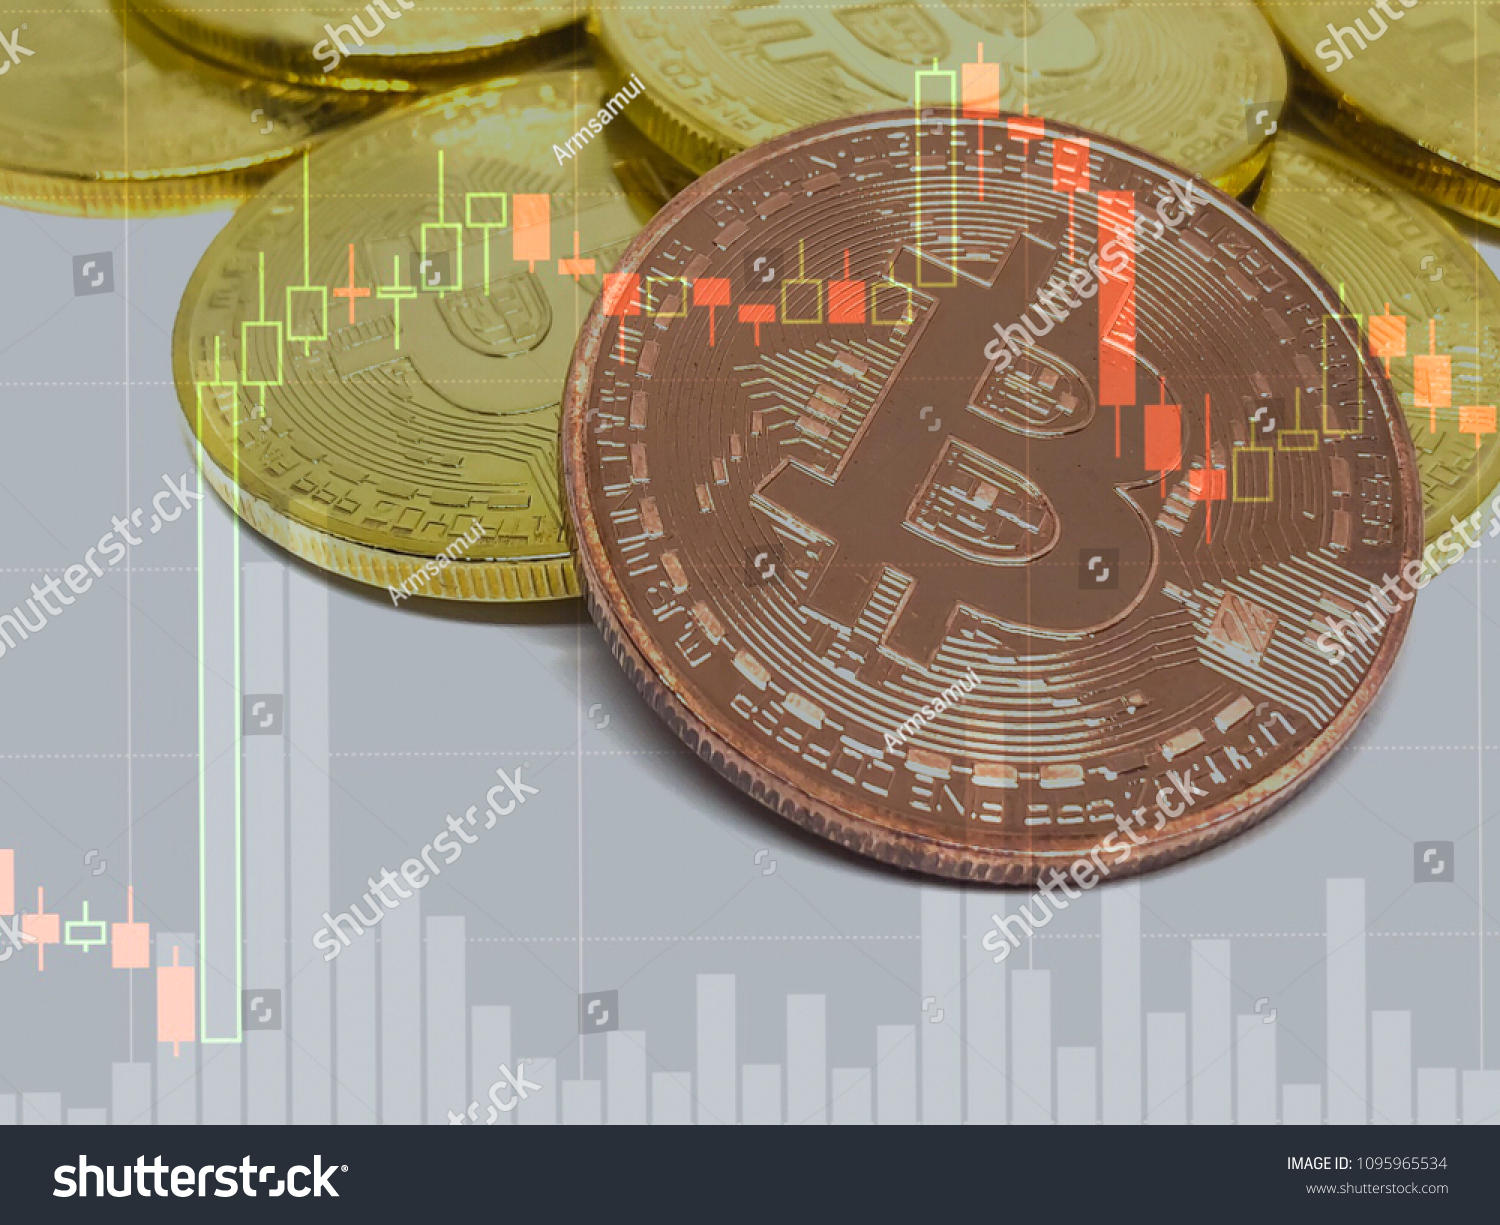 Bitcoin Currency Exchange Chart